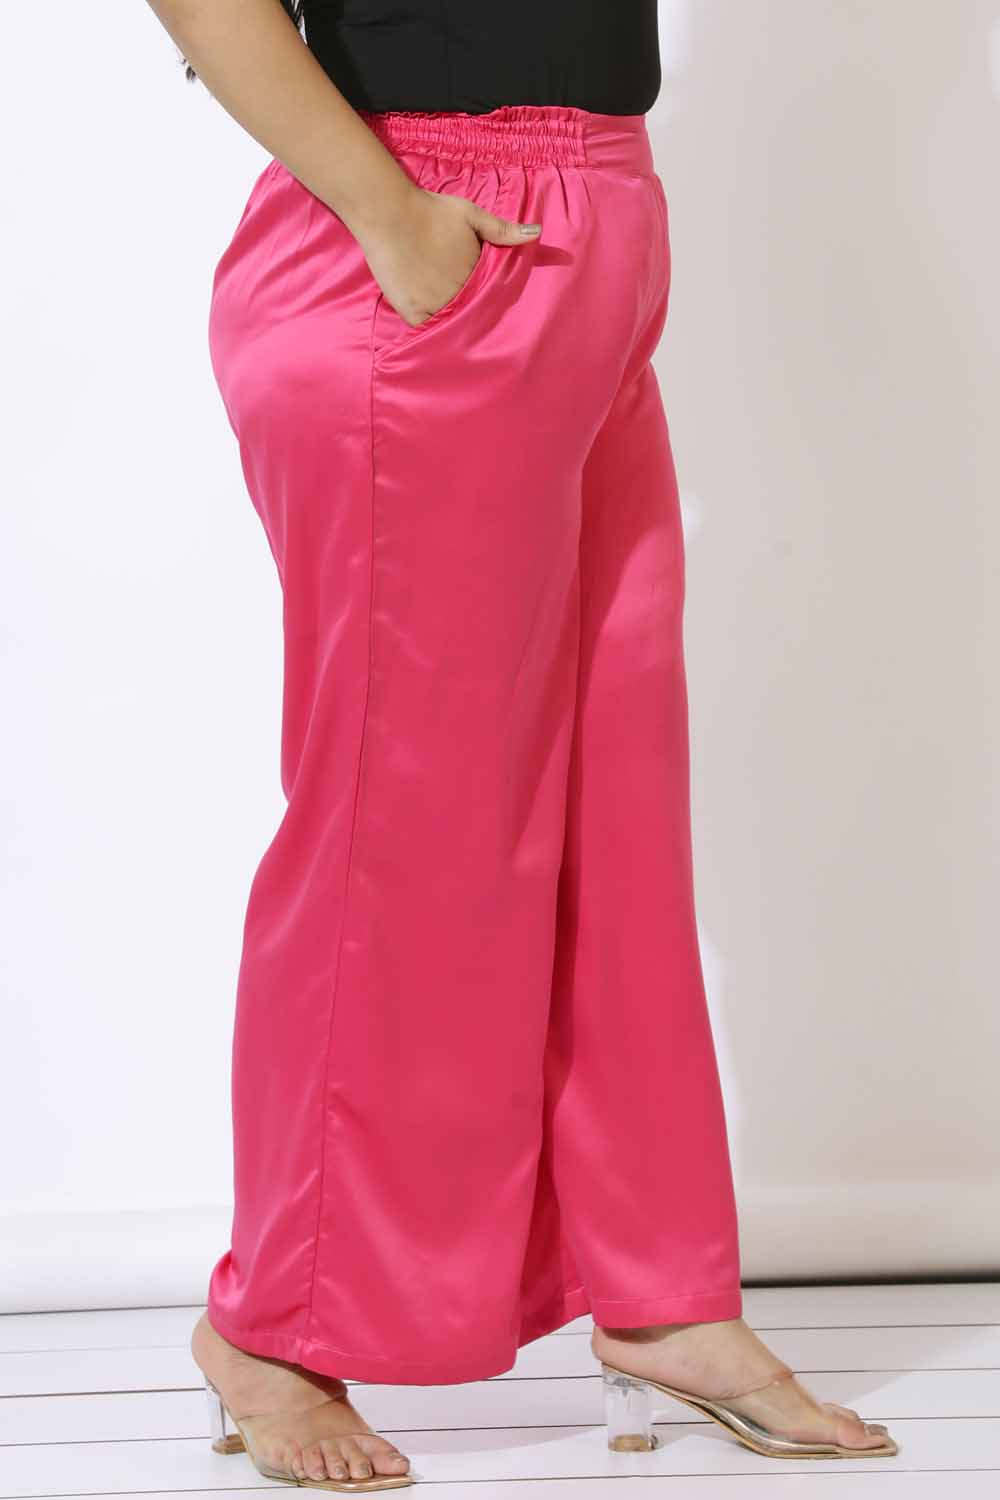 Plus Size Pink Satin High Waist Pants for Women